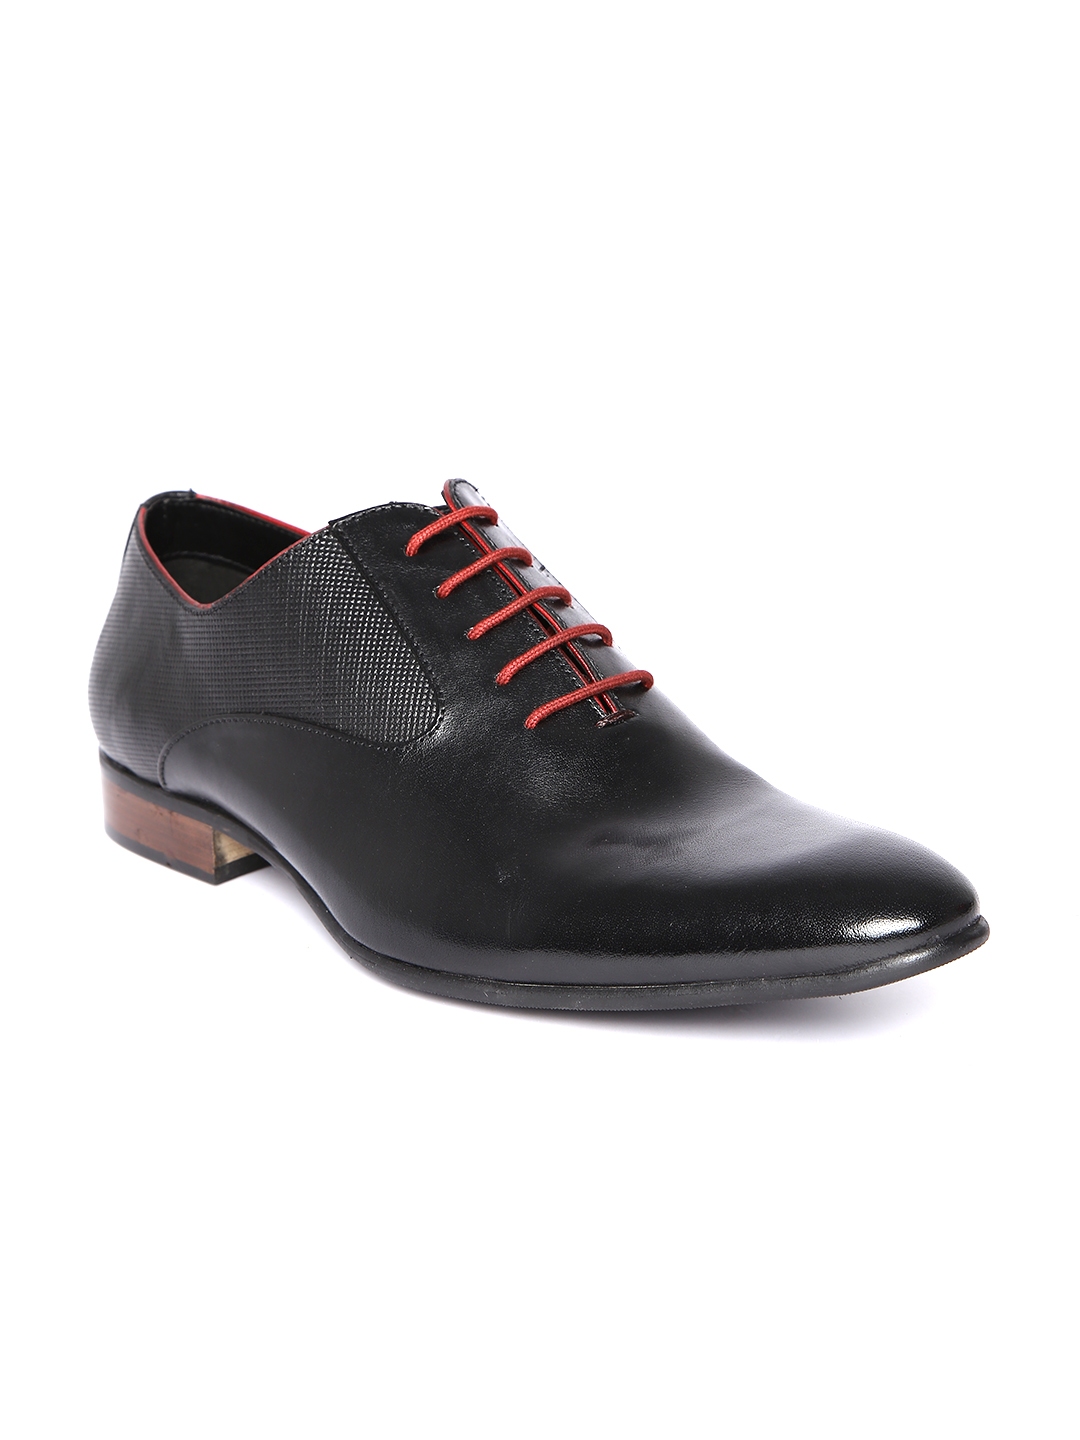 alberto torresi men's formal shoes